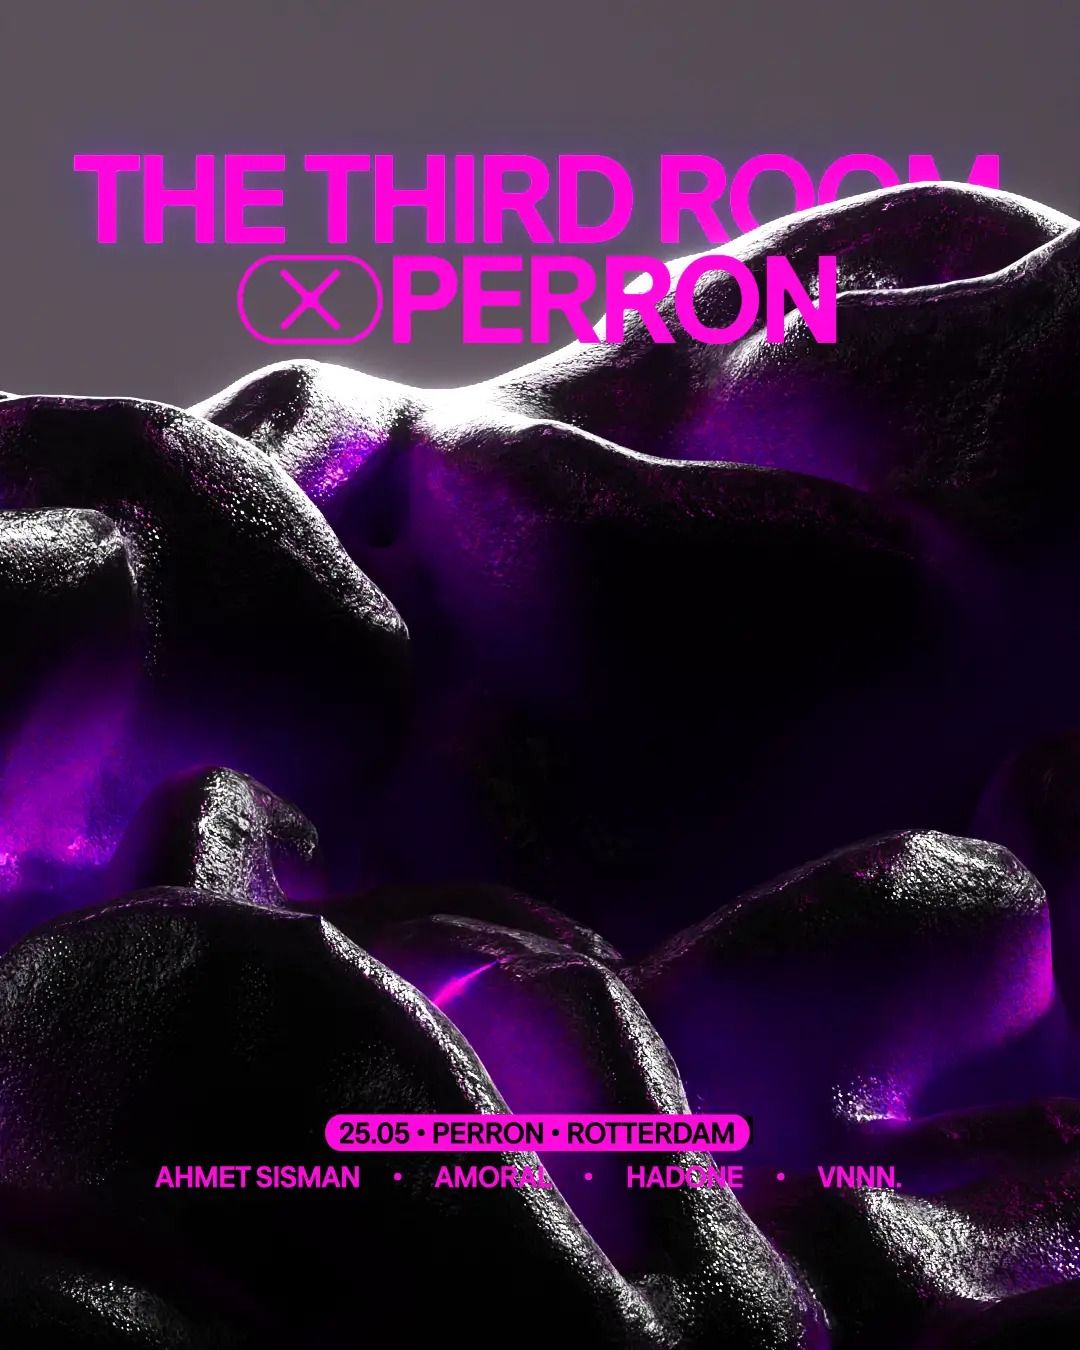 The Third Room x Perron: Ahmet Sisman, Amoral, Hadone, VNNN.